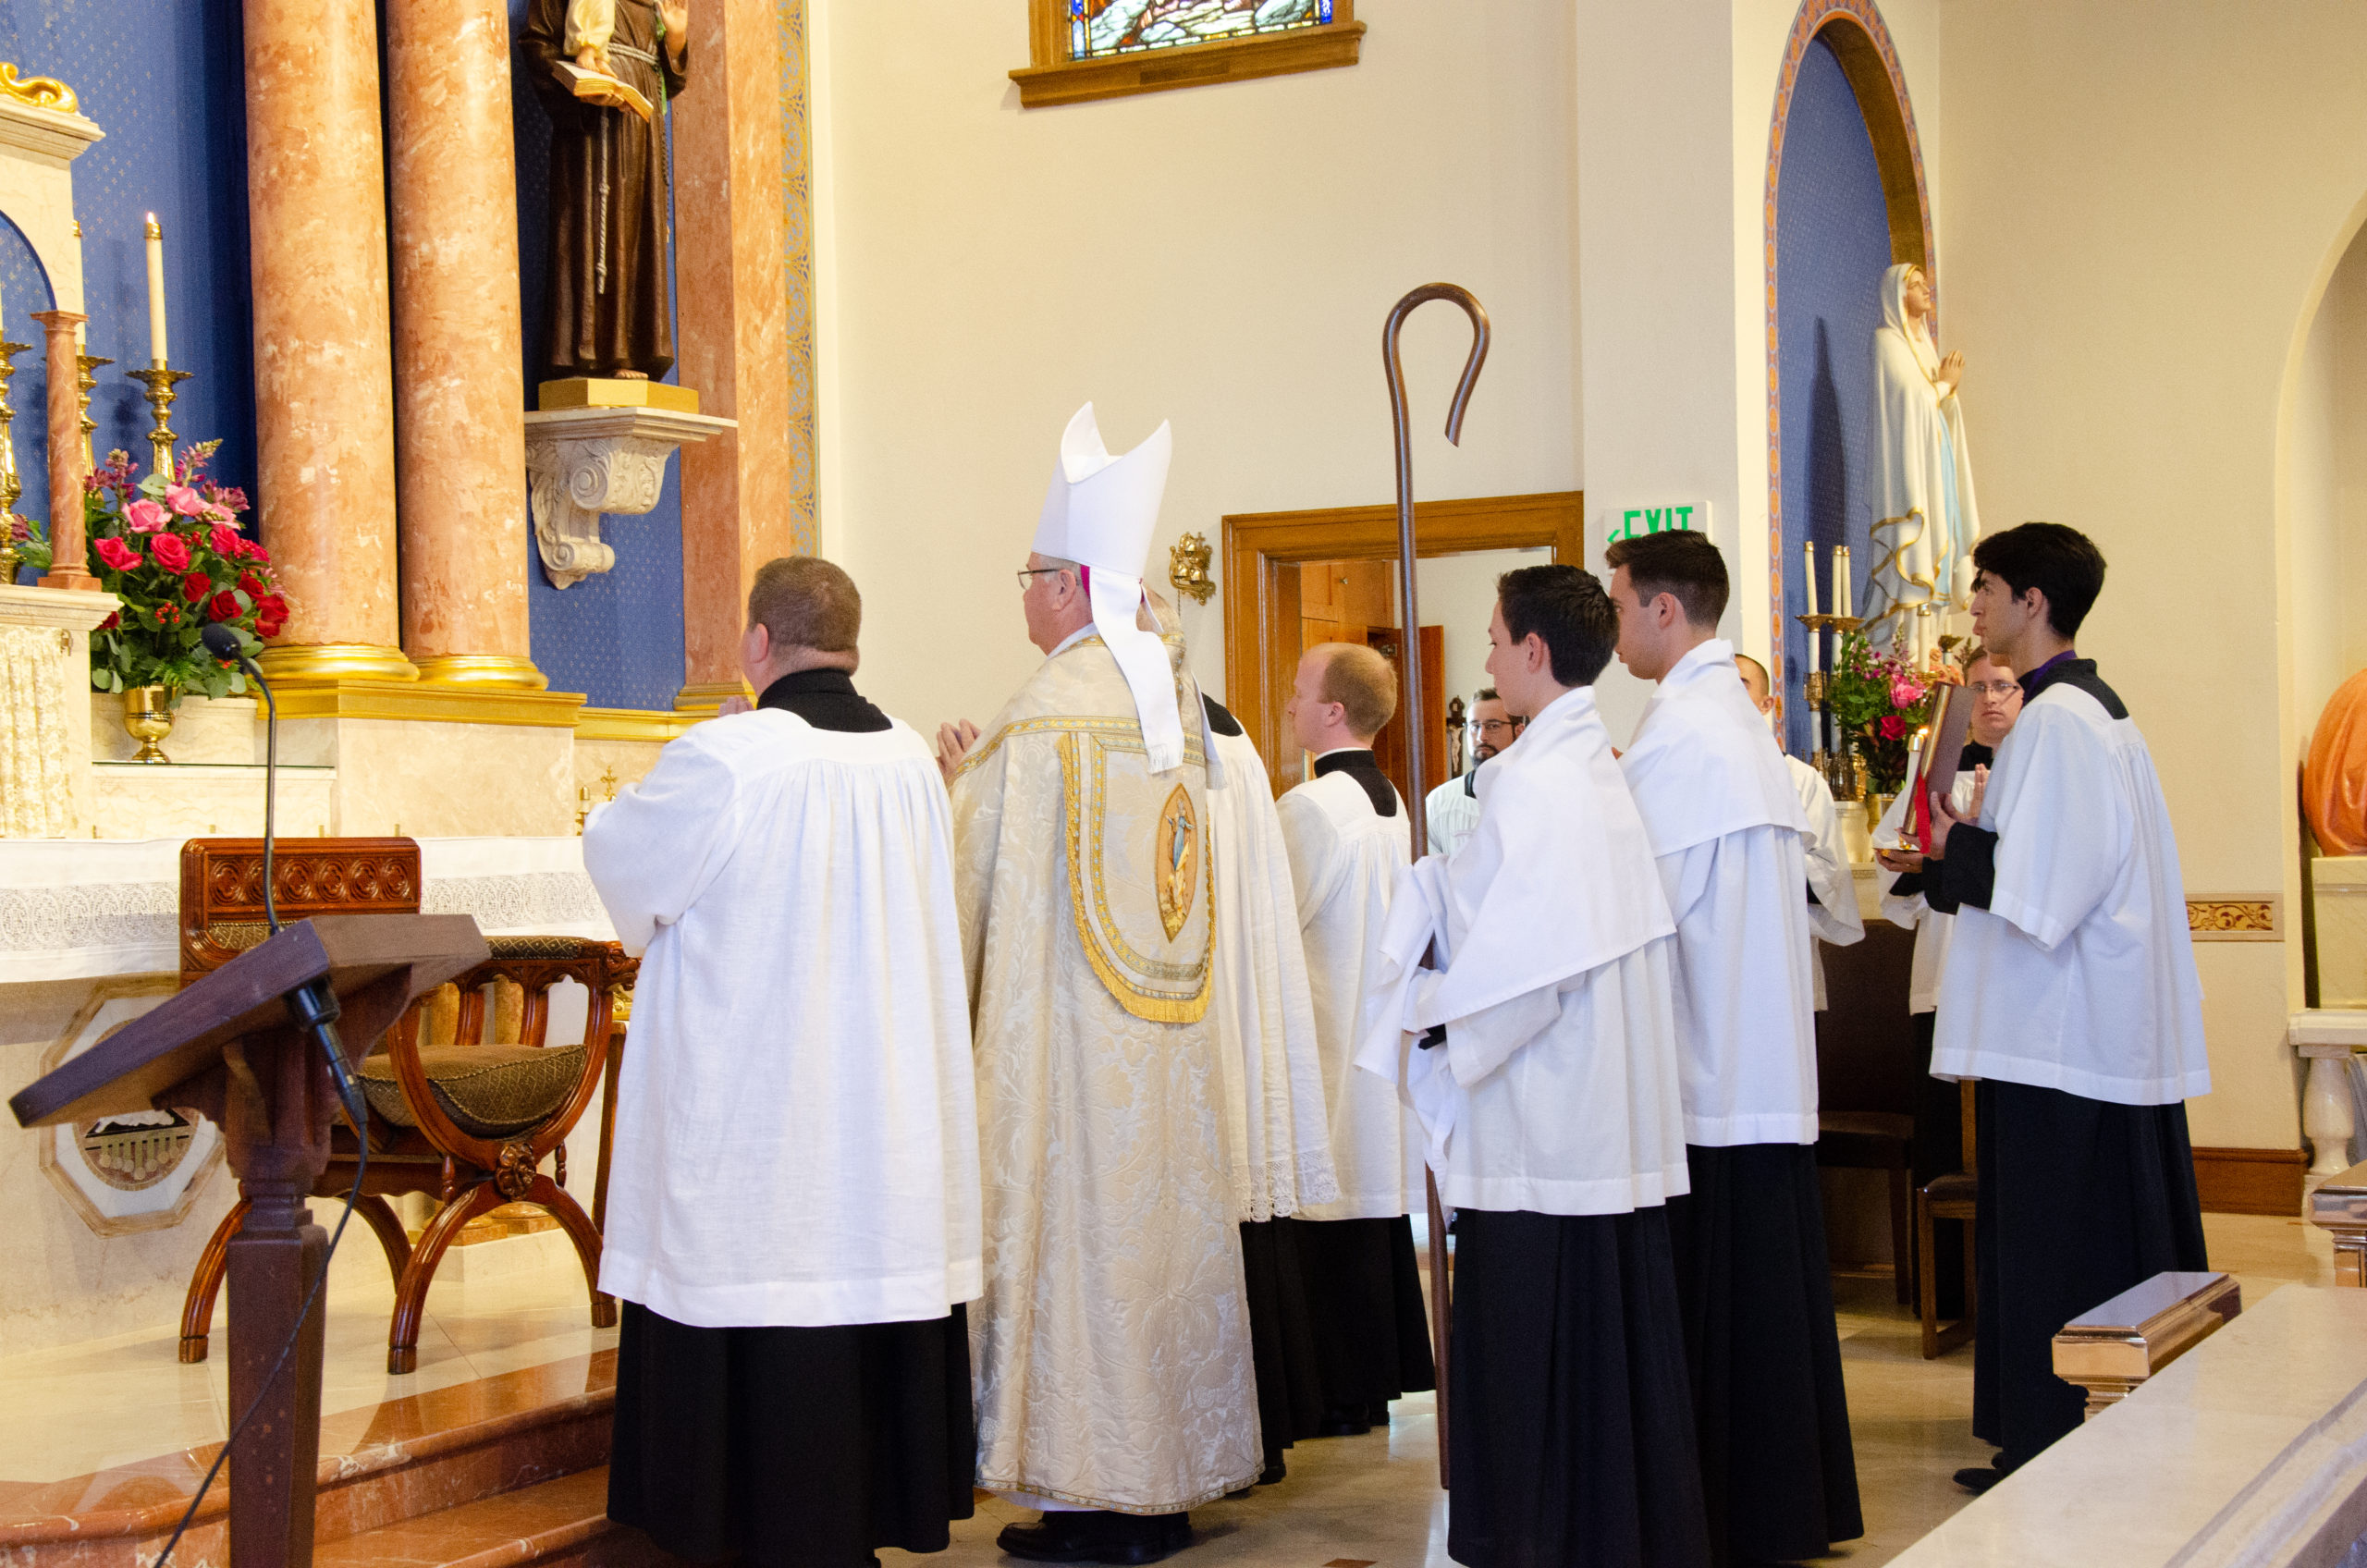 Altar Servers at a confirmation Mass